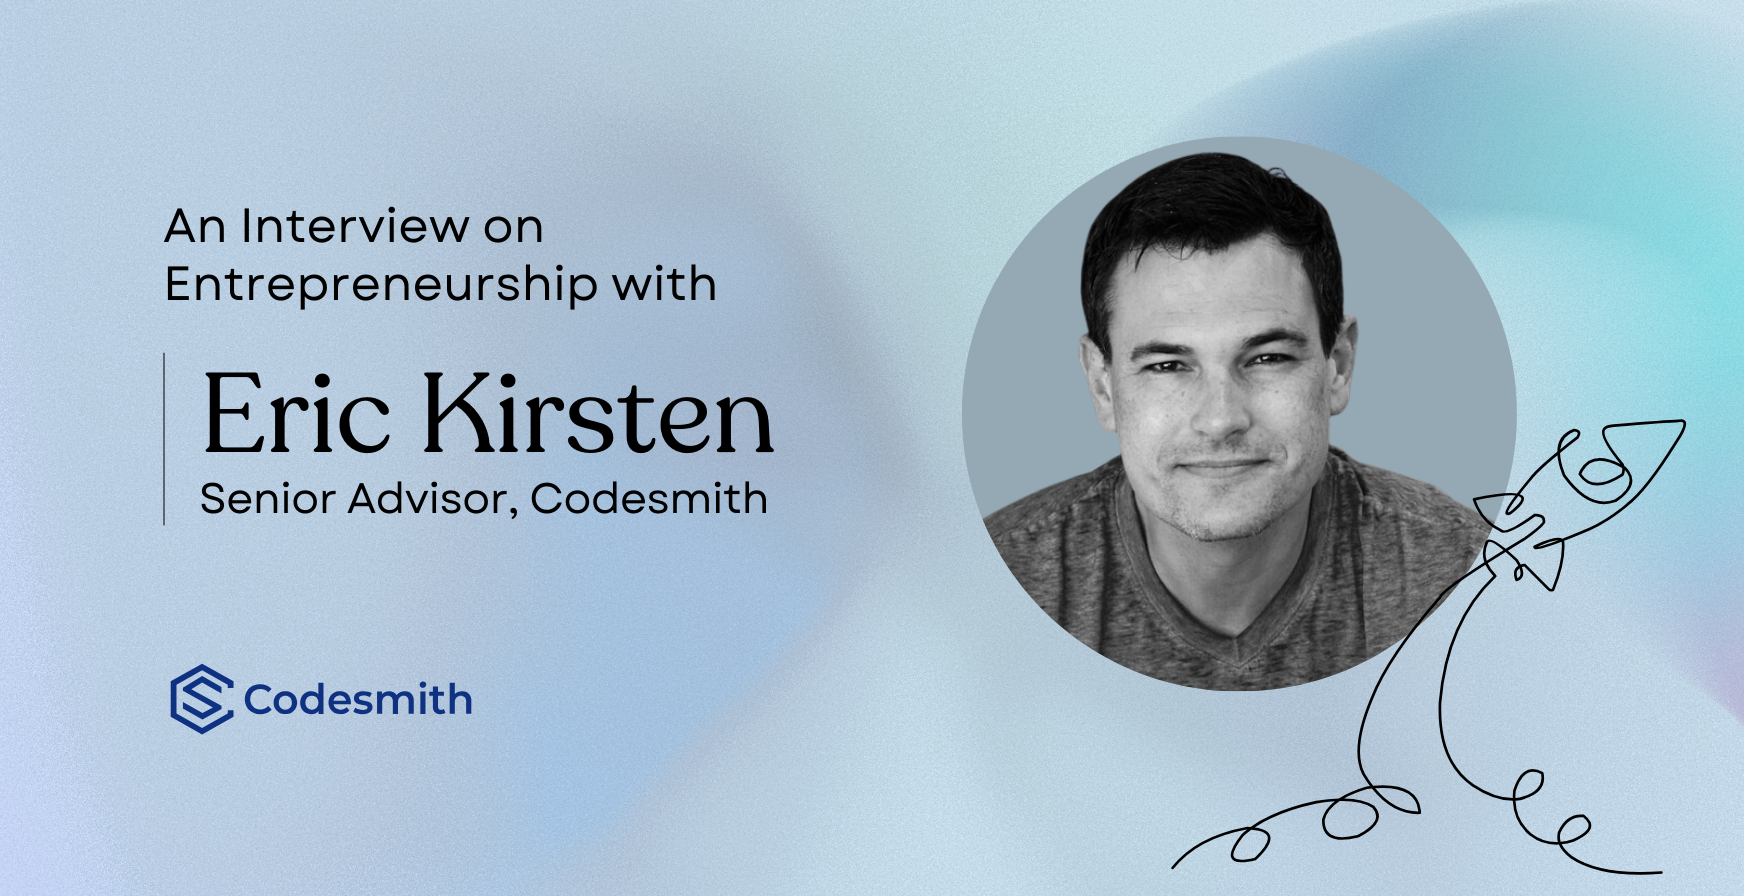 An Interview on Entrepreneurship with Codesmith Sr. Advisor Eric Kirsten